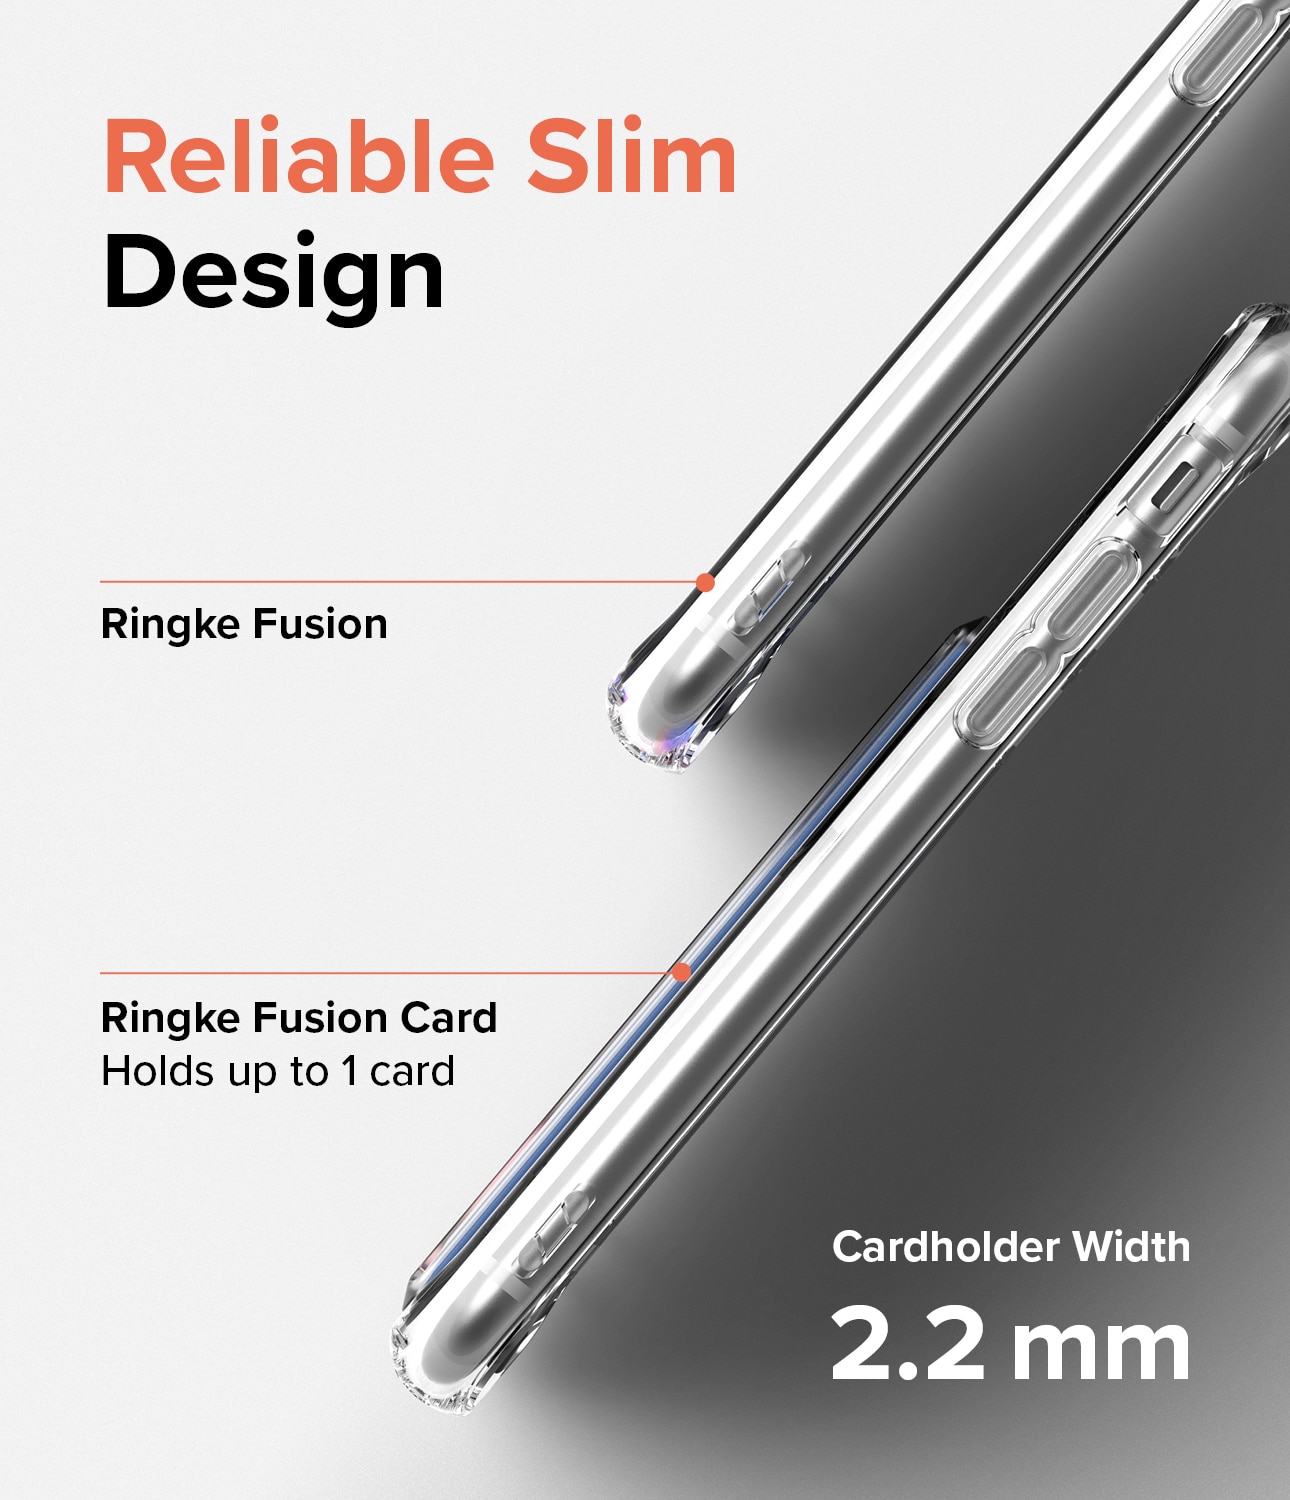 Funda Fusion Card iPhone SE (2022) Transparente